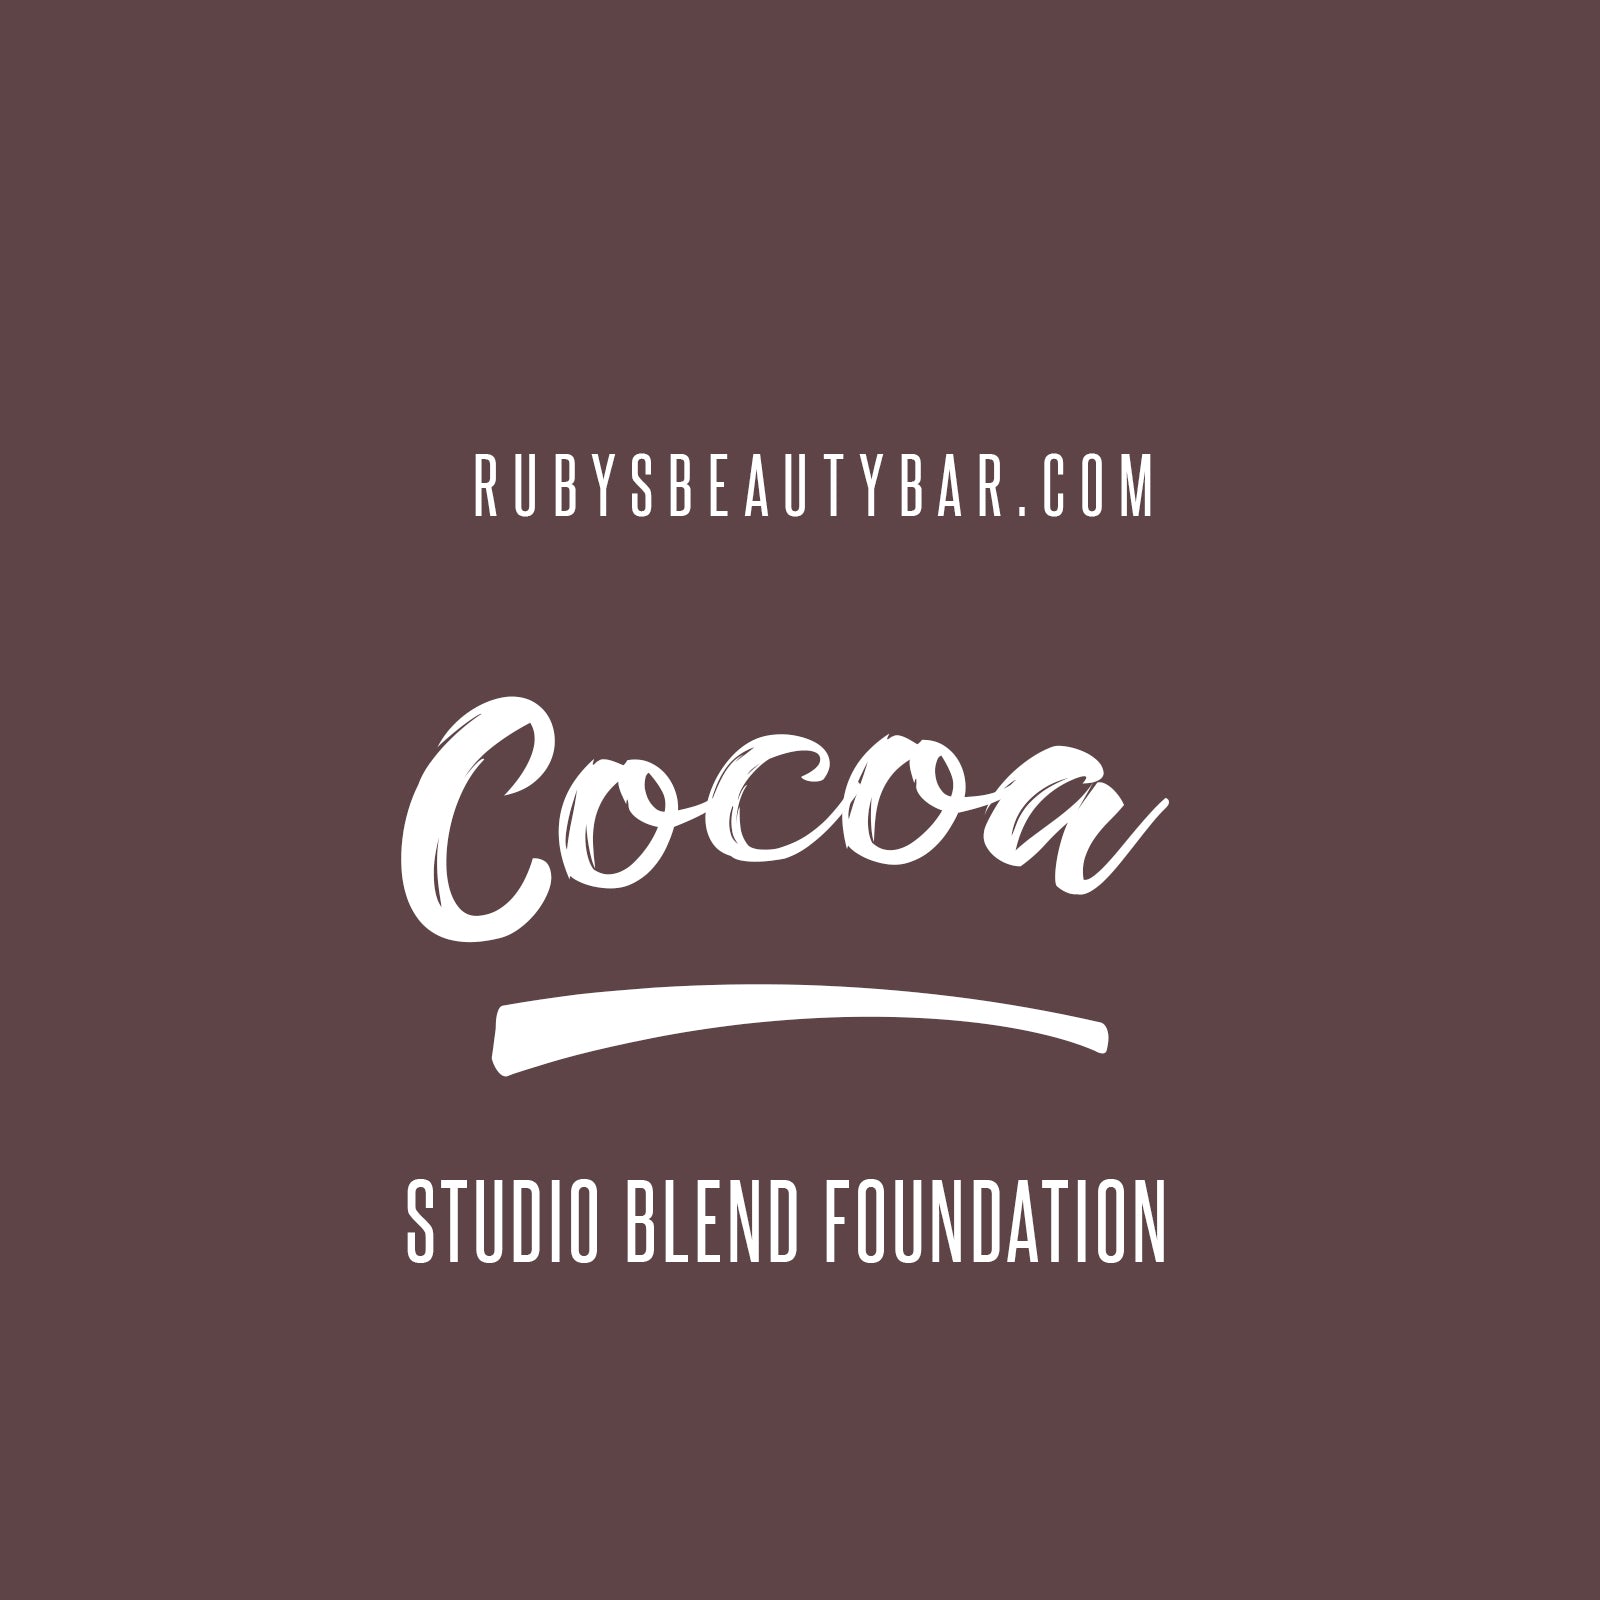 Cocoa Studio Blend Foundation - rubybeautycle